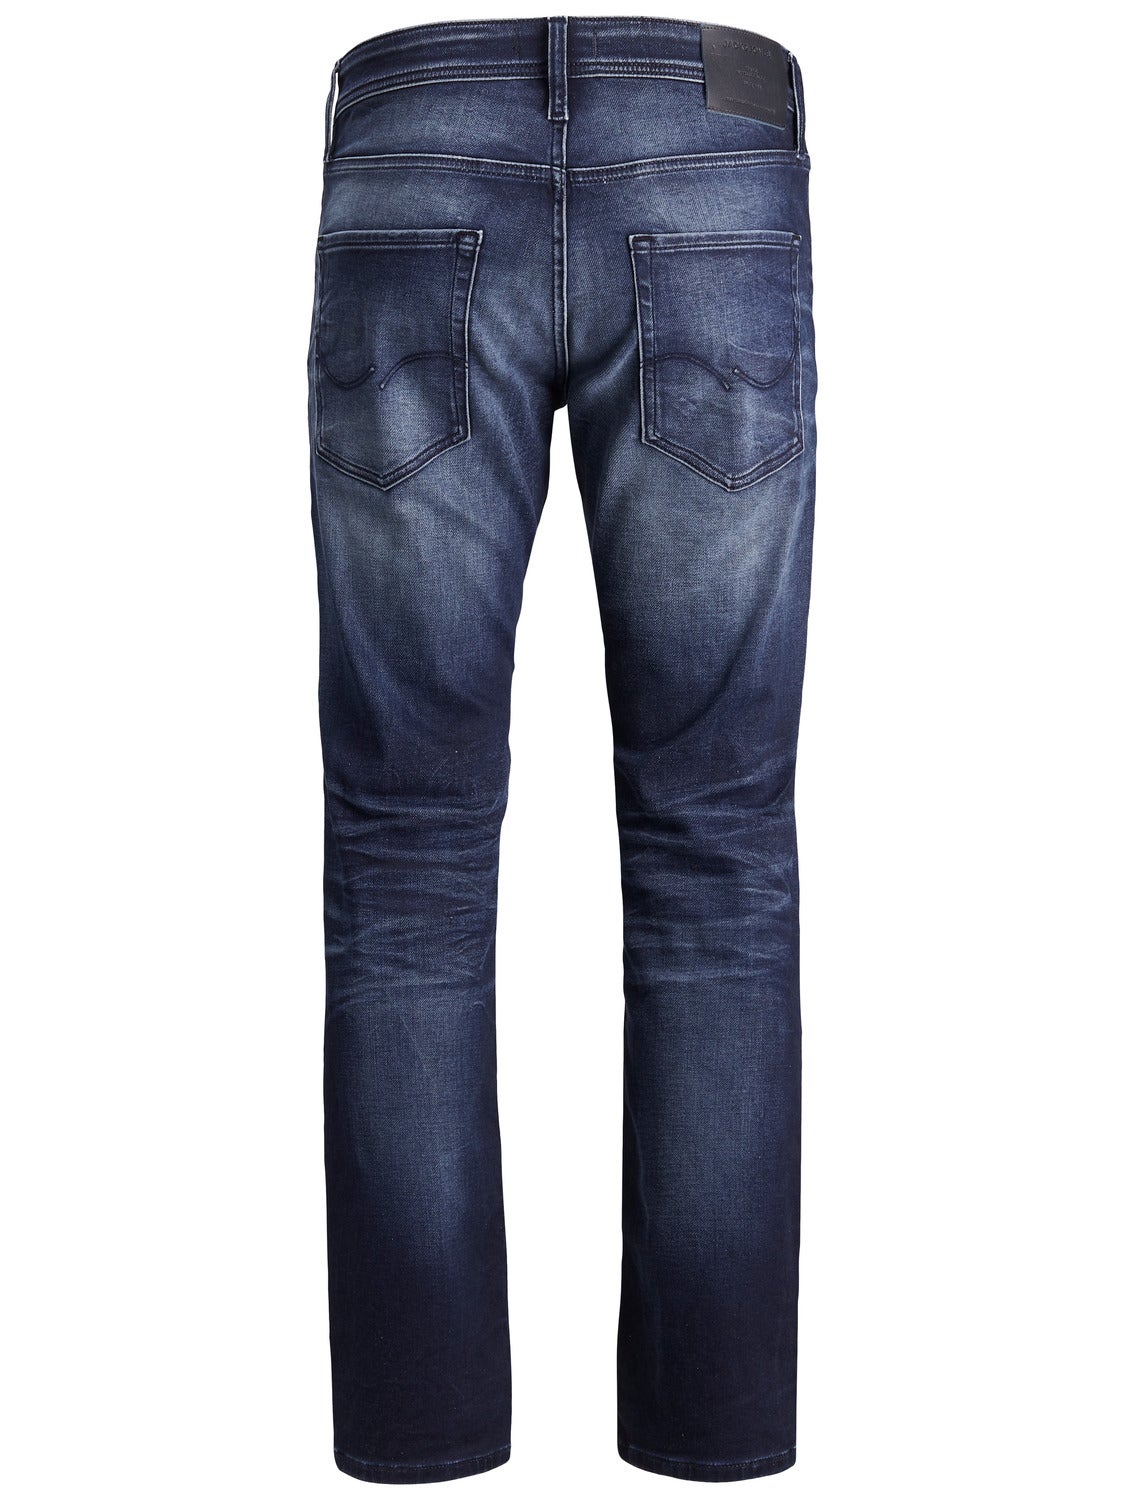 Buy Blue Jeans for Men by Jack & Jones Online | Ajio.com